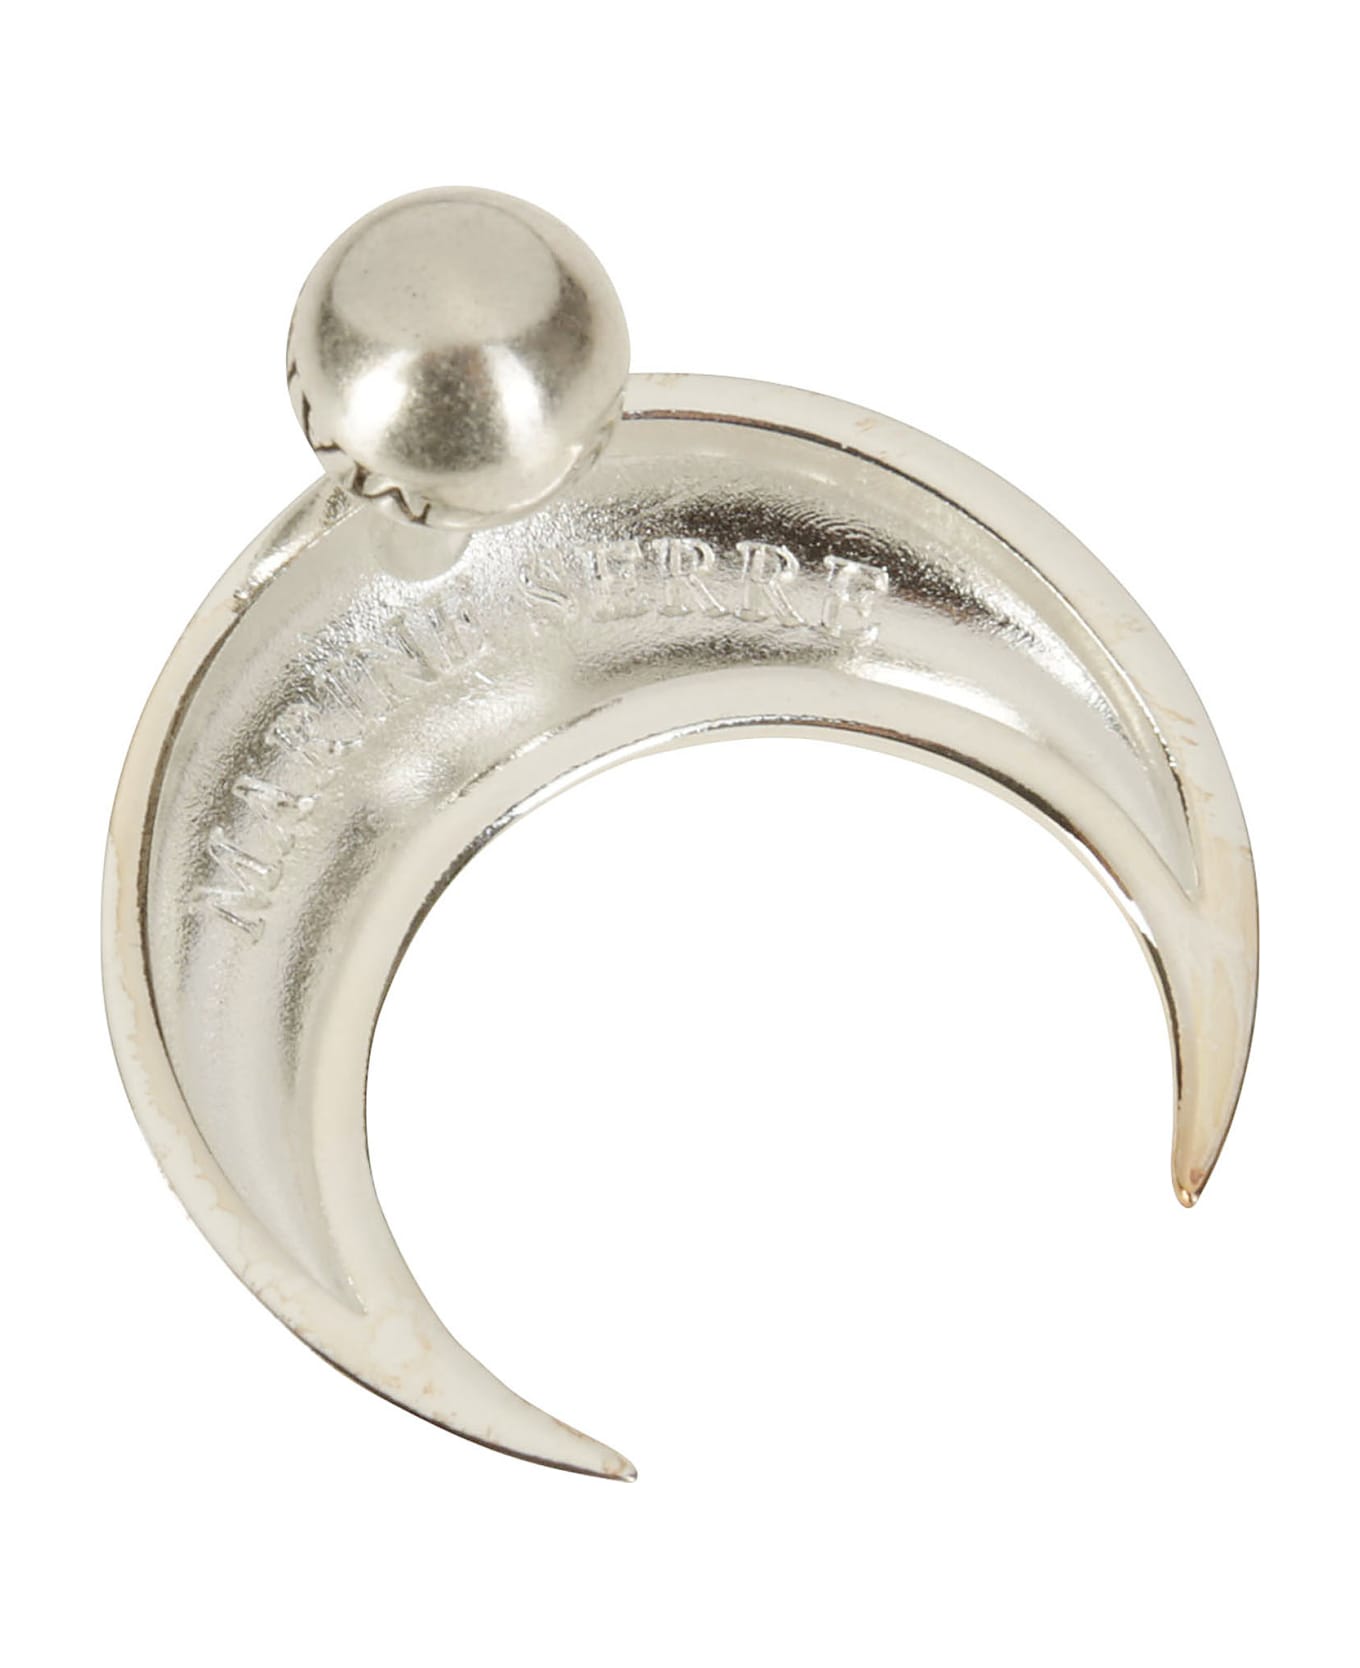 Marine Serre Regenerated Single Tin Moon Stud Earrings - SILVER イヤリング